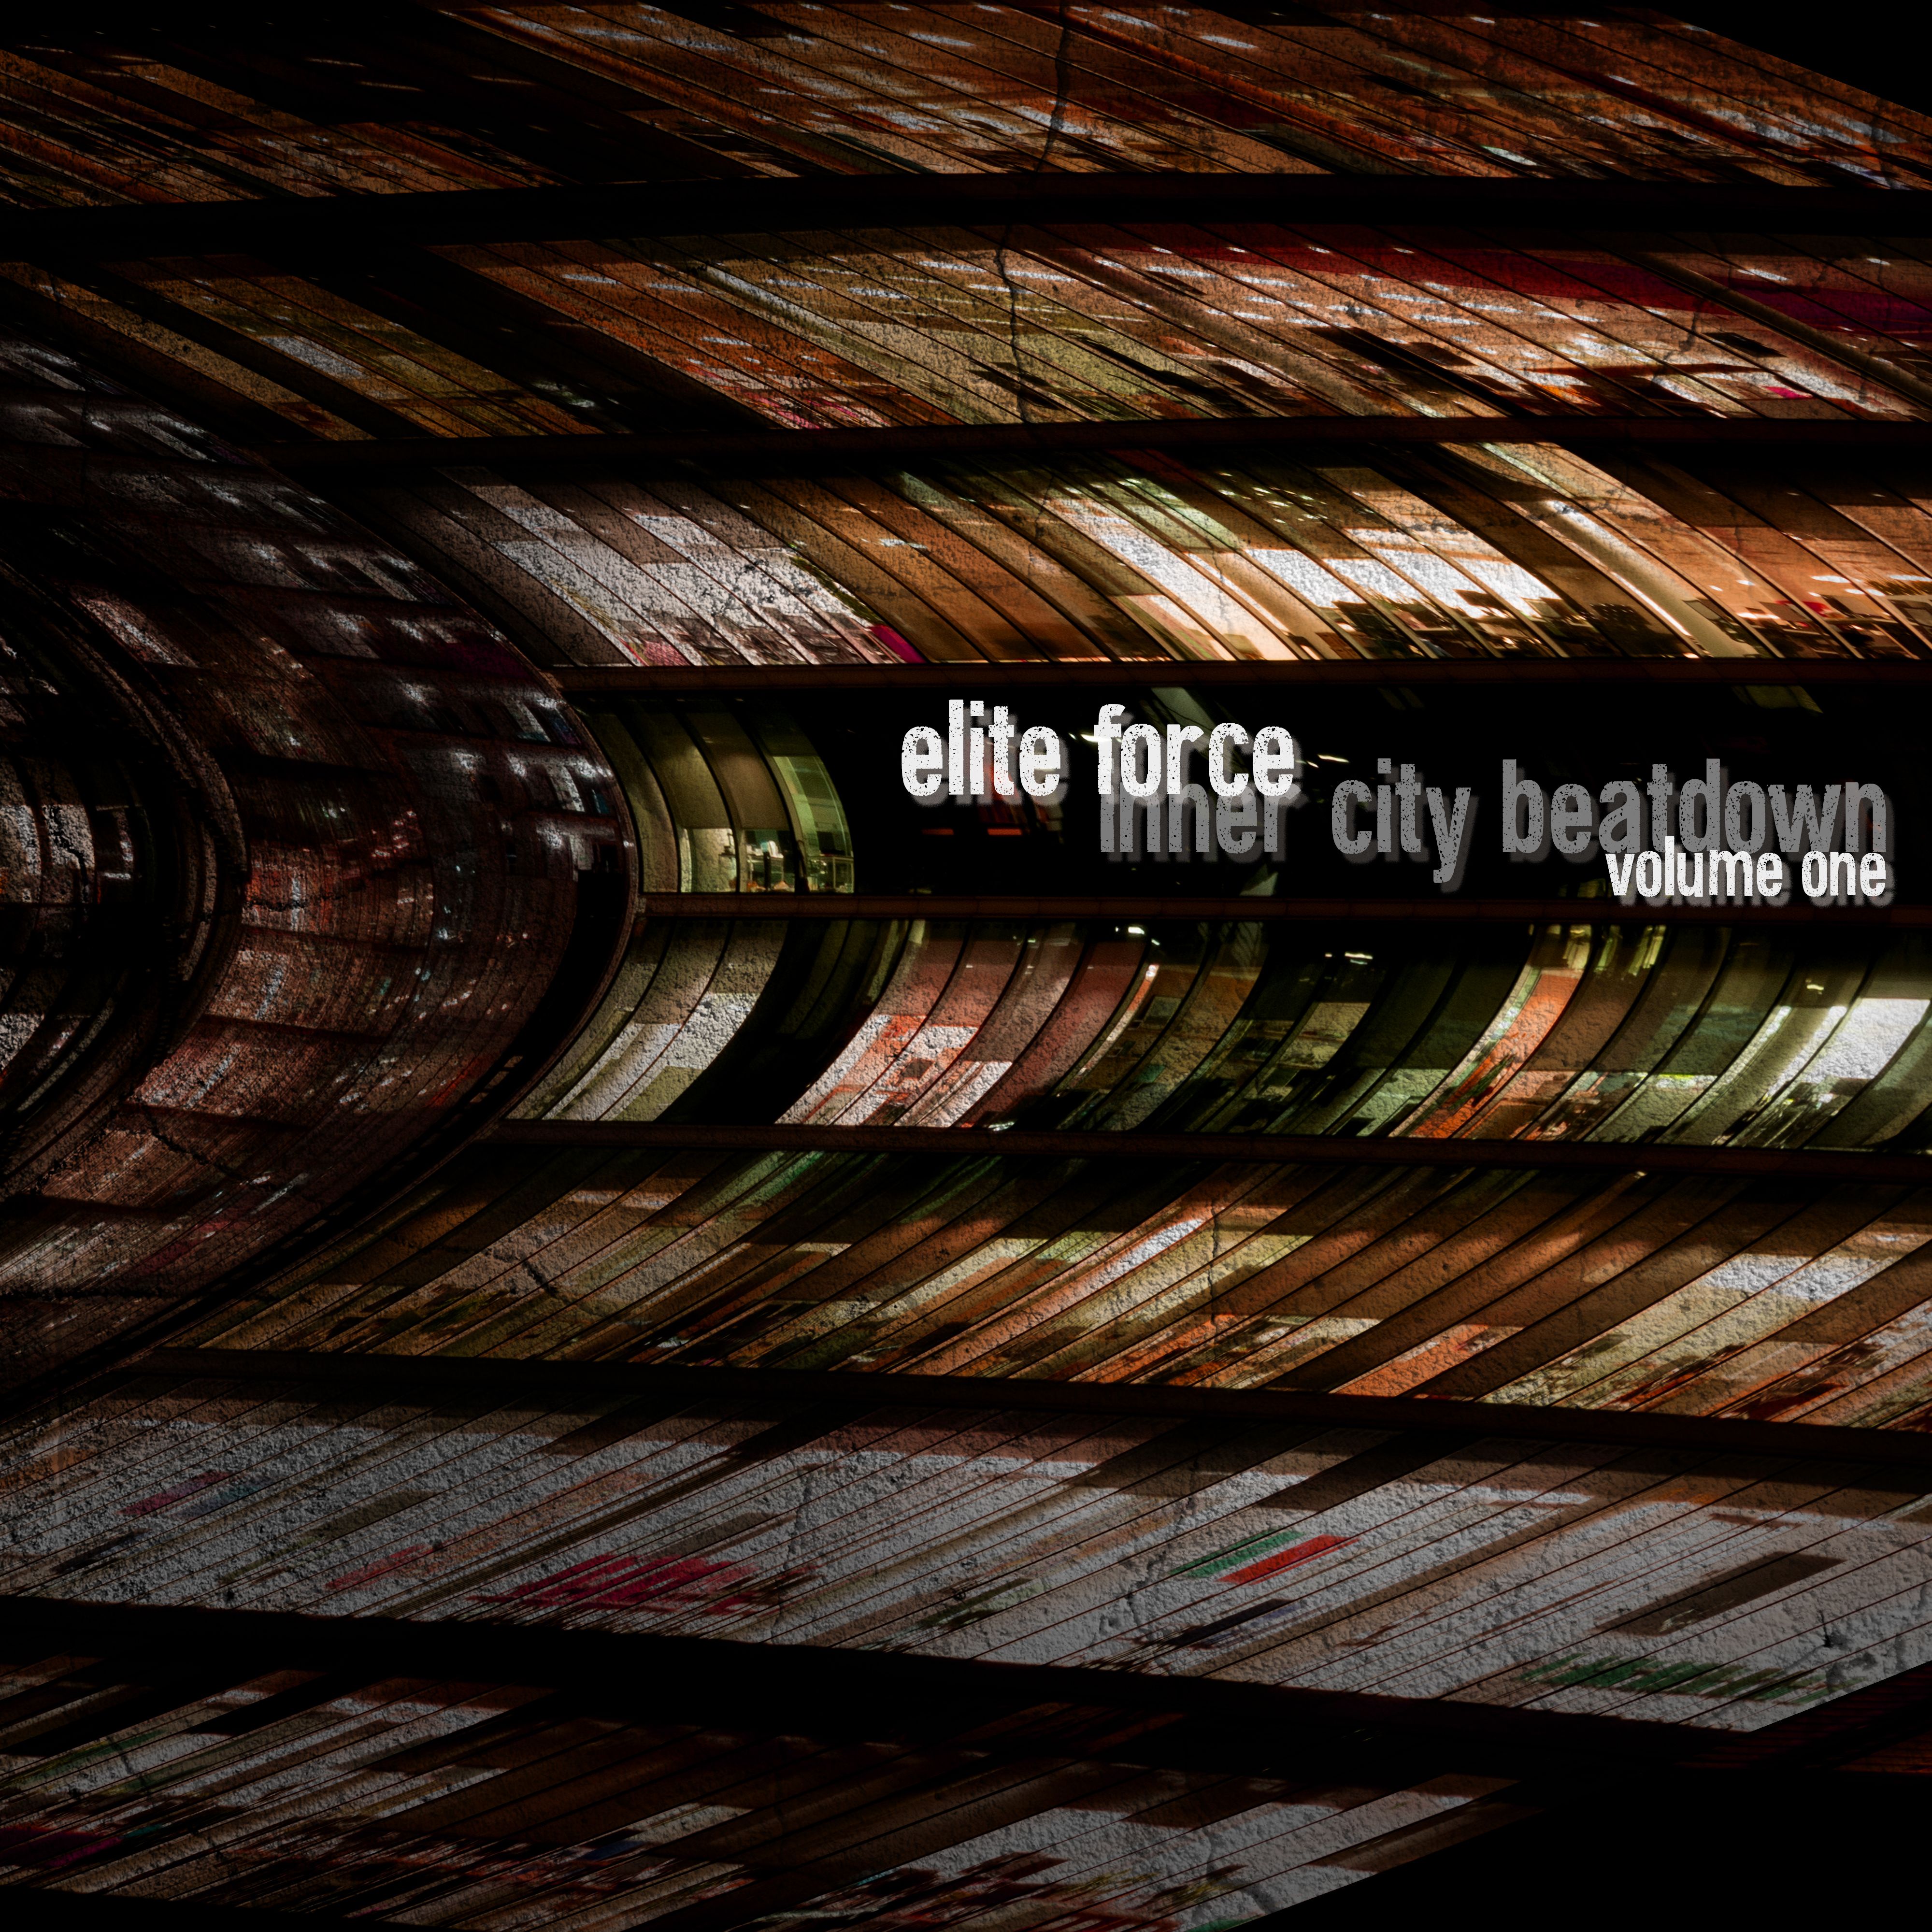 डाउनलोड करा Elite Force - In The Crossfire